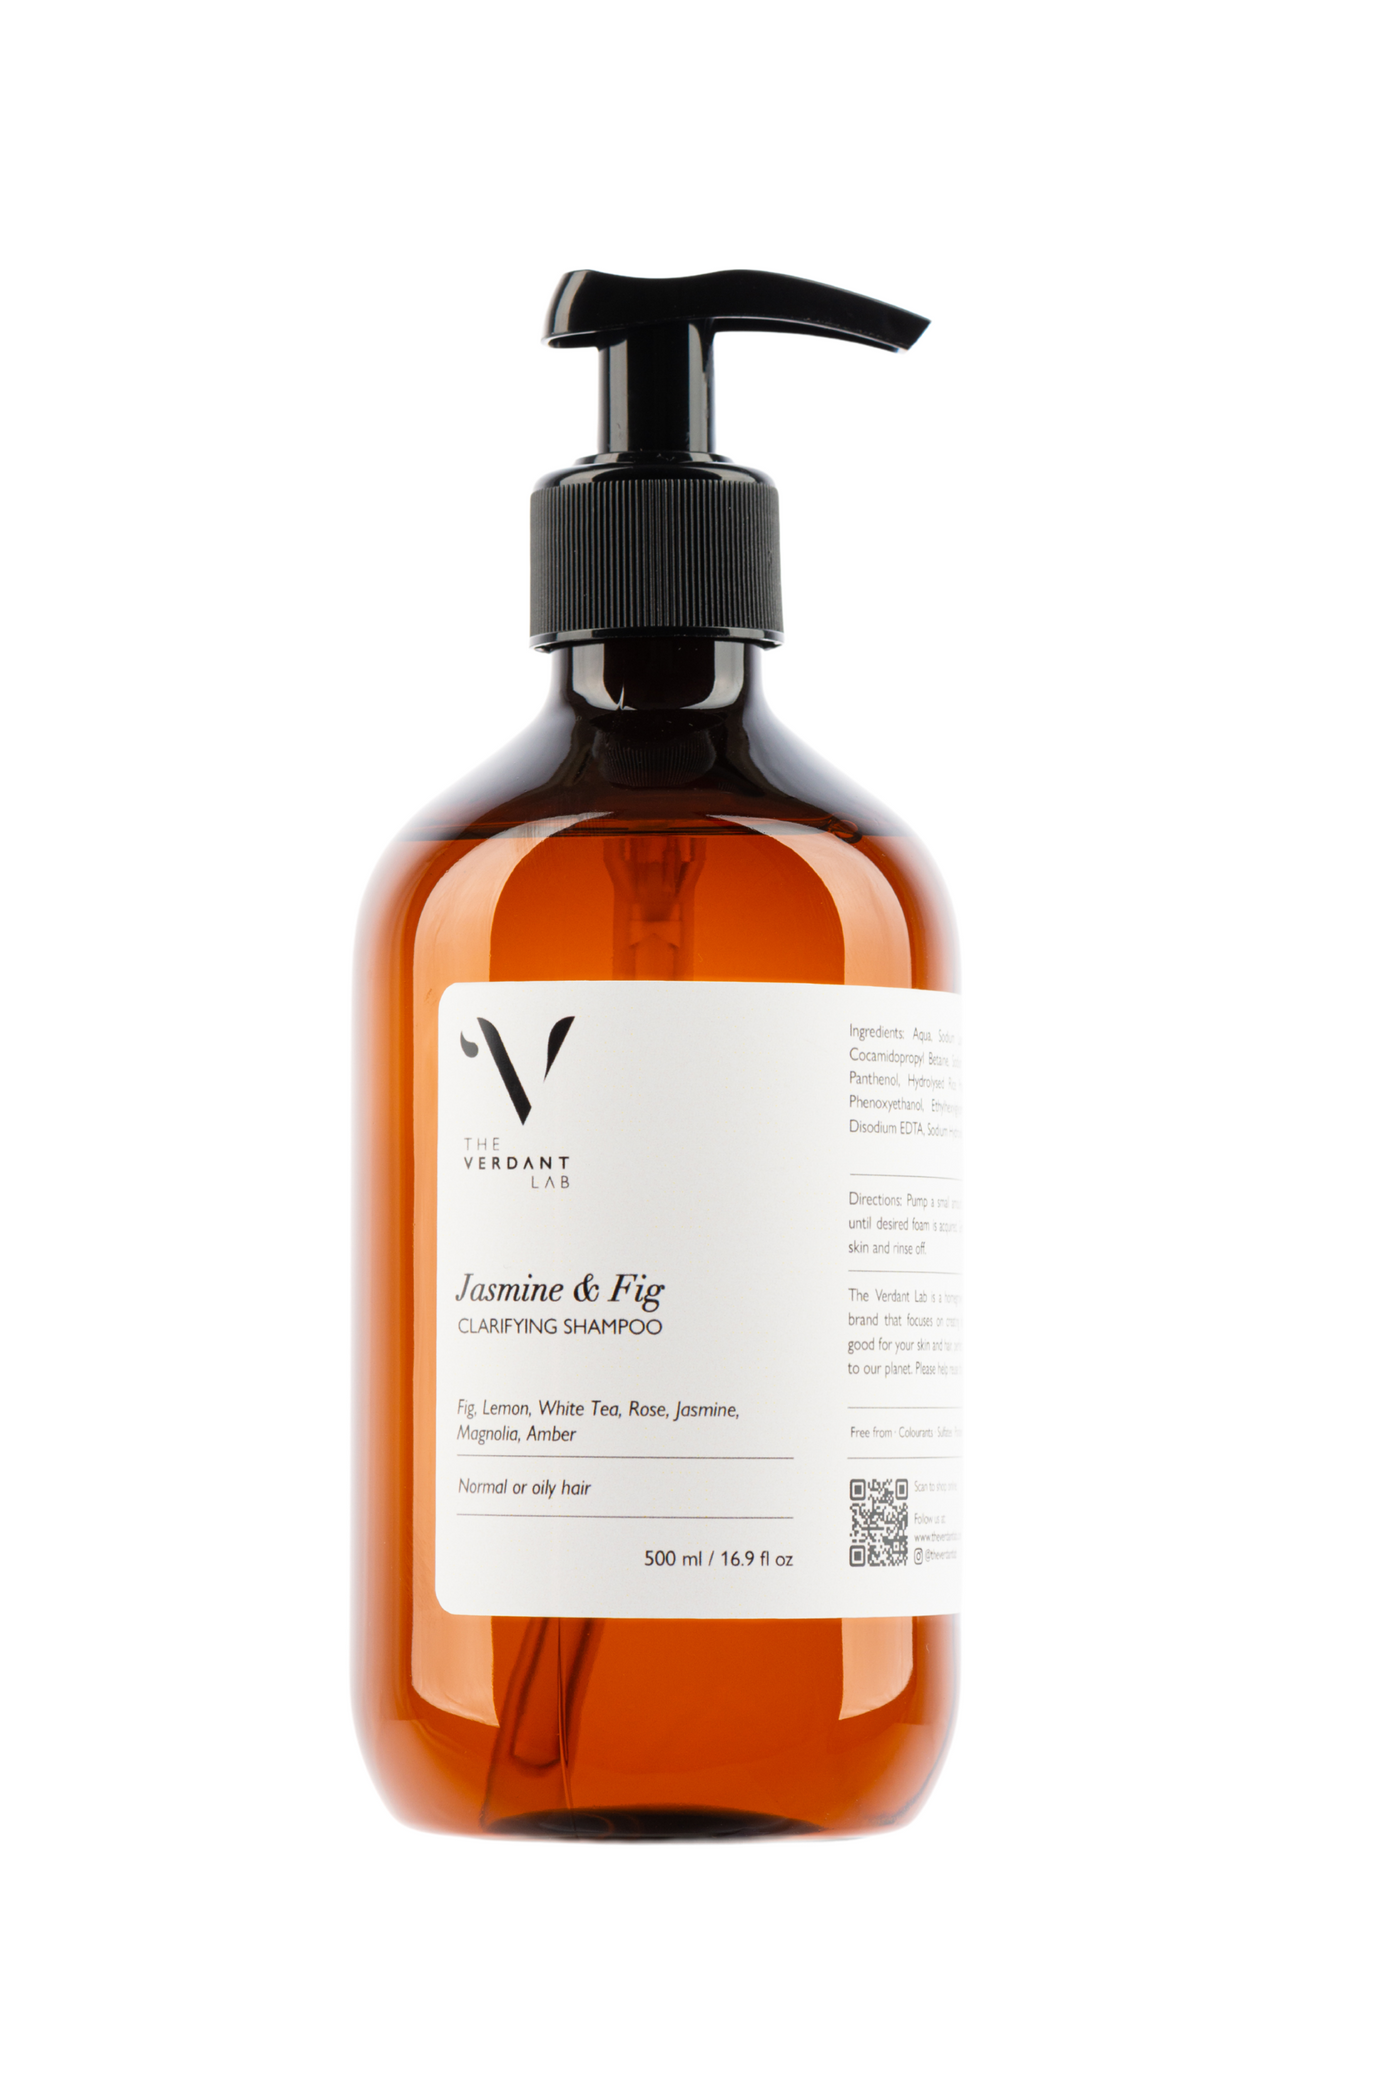 The Verdant Lab Clarifying Shampoo in Jasmine & Fig available on ZERRIN